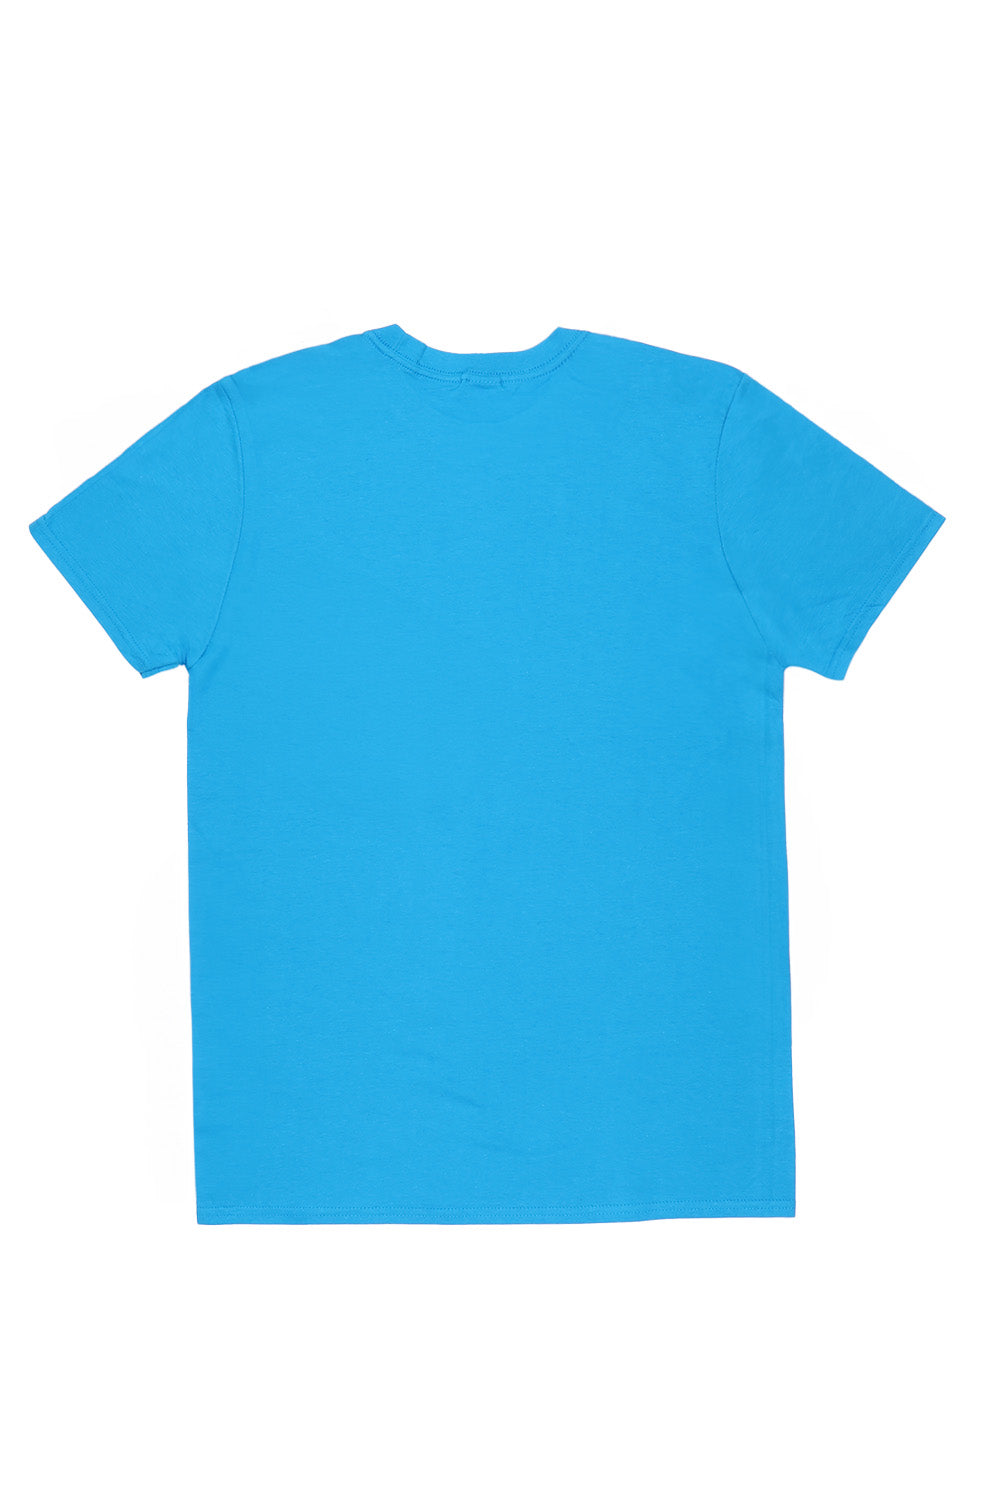 New York T-Shirt in Sapphire Blue (Custom Packs)